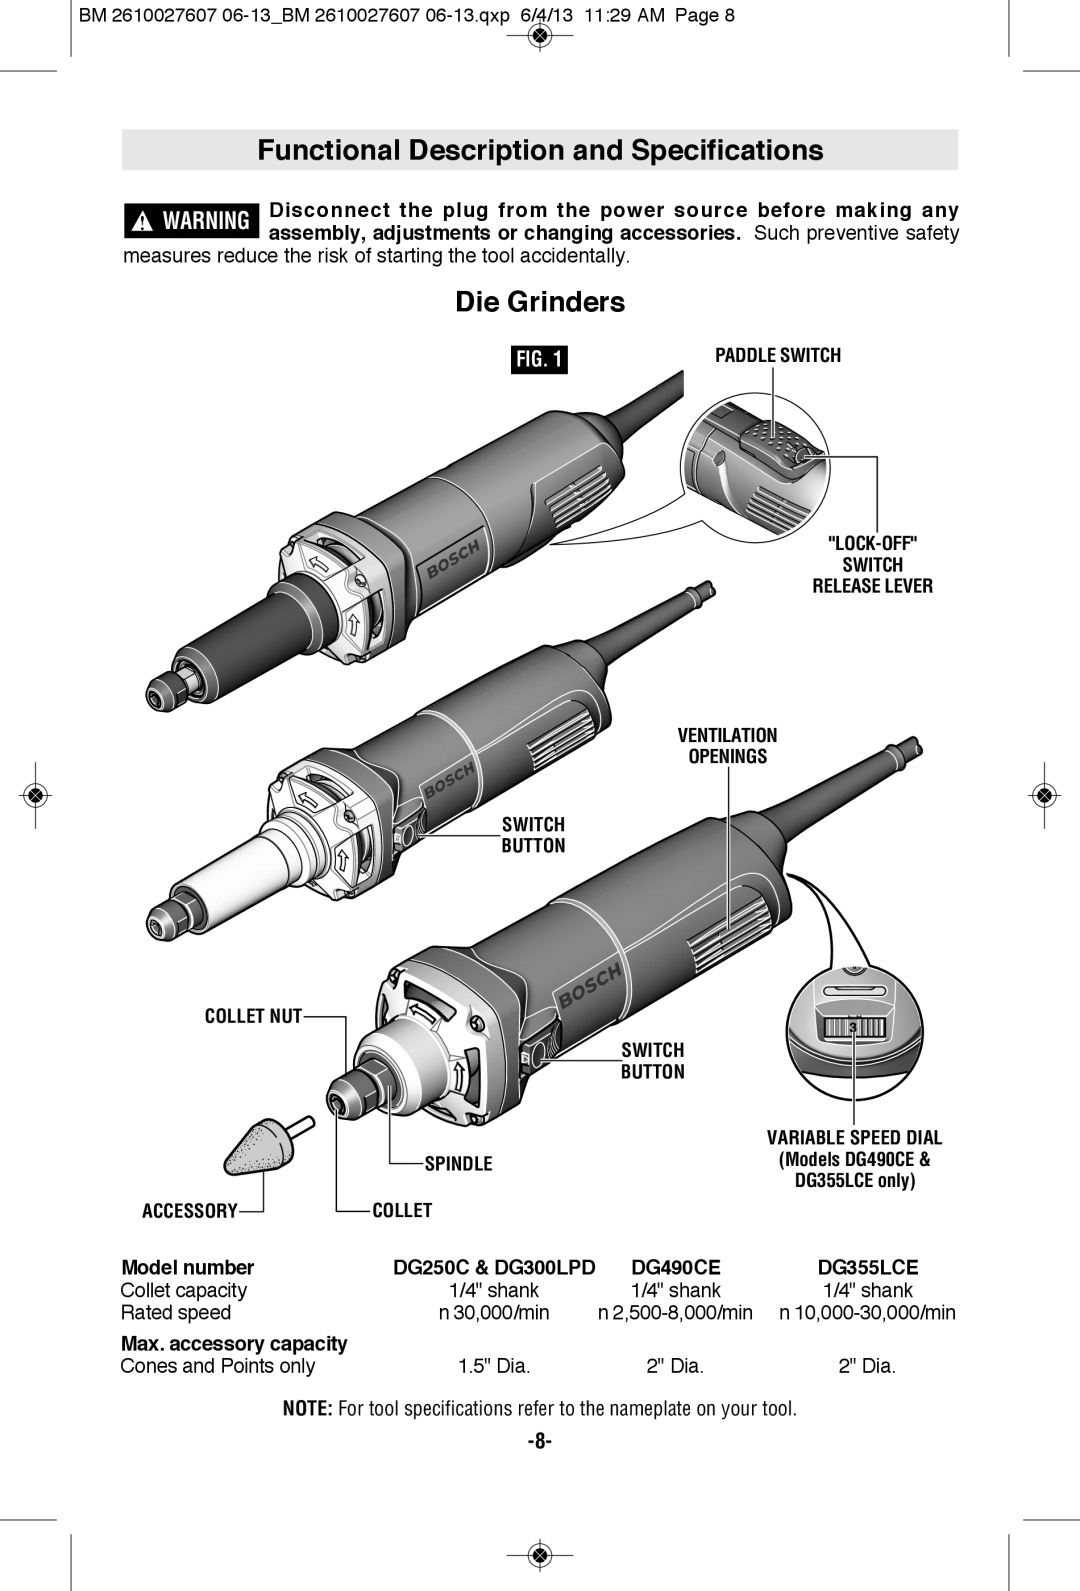 Bosch Power Tools DG355LCE, DG250C, DG490CE manual Functional Description and Specifications, Die Grinders 